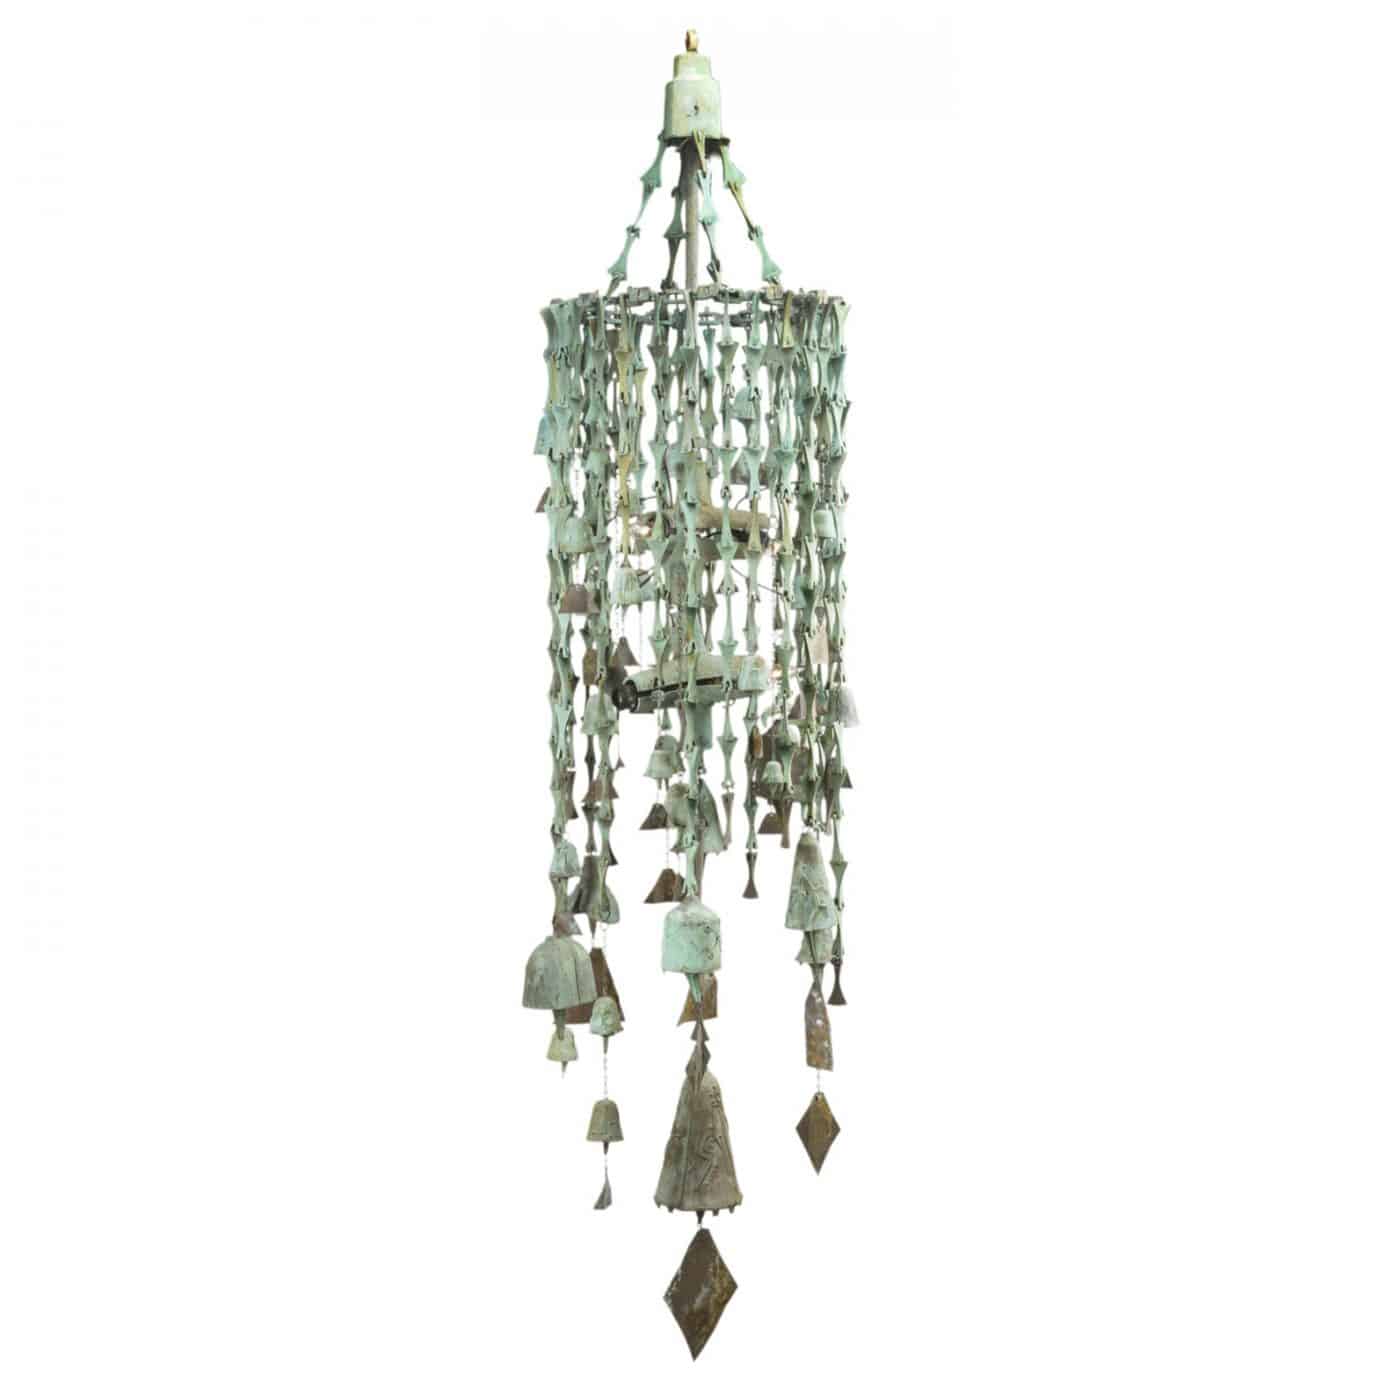 PAOLO SOLERI’s ca. 1975 bell chandelier